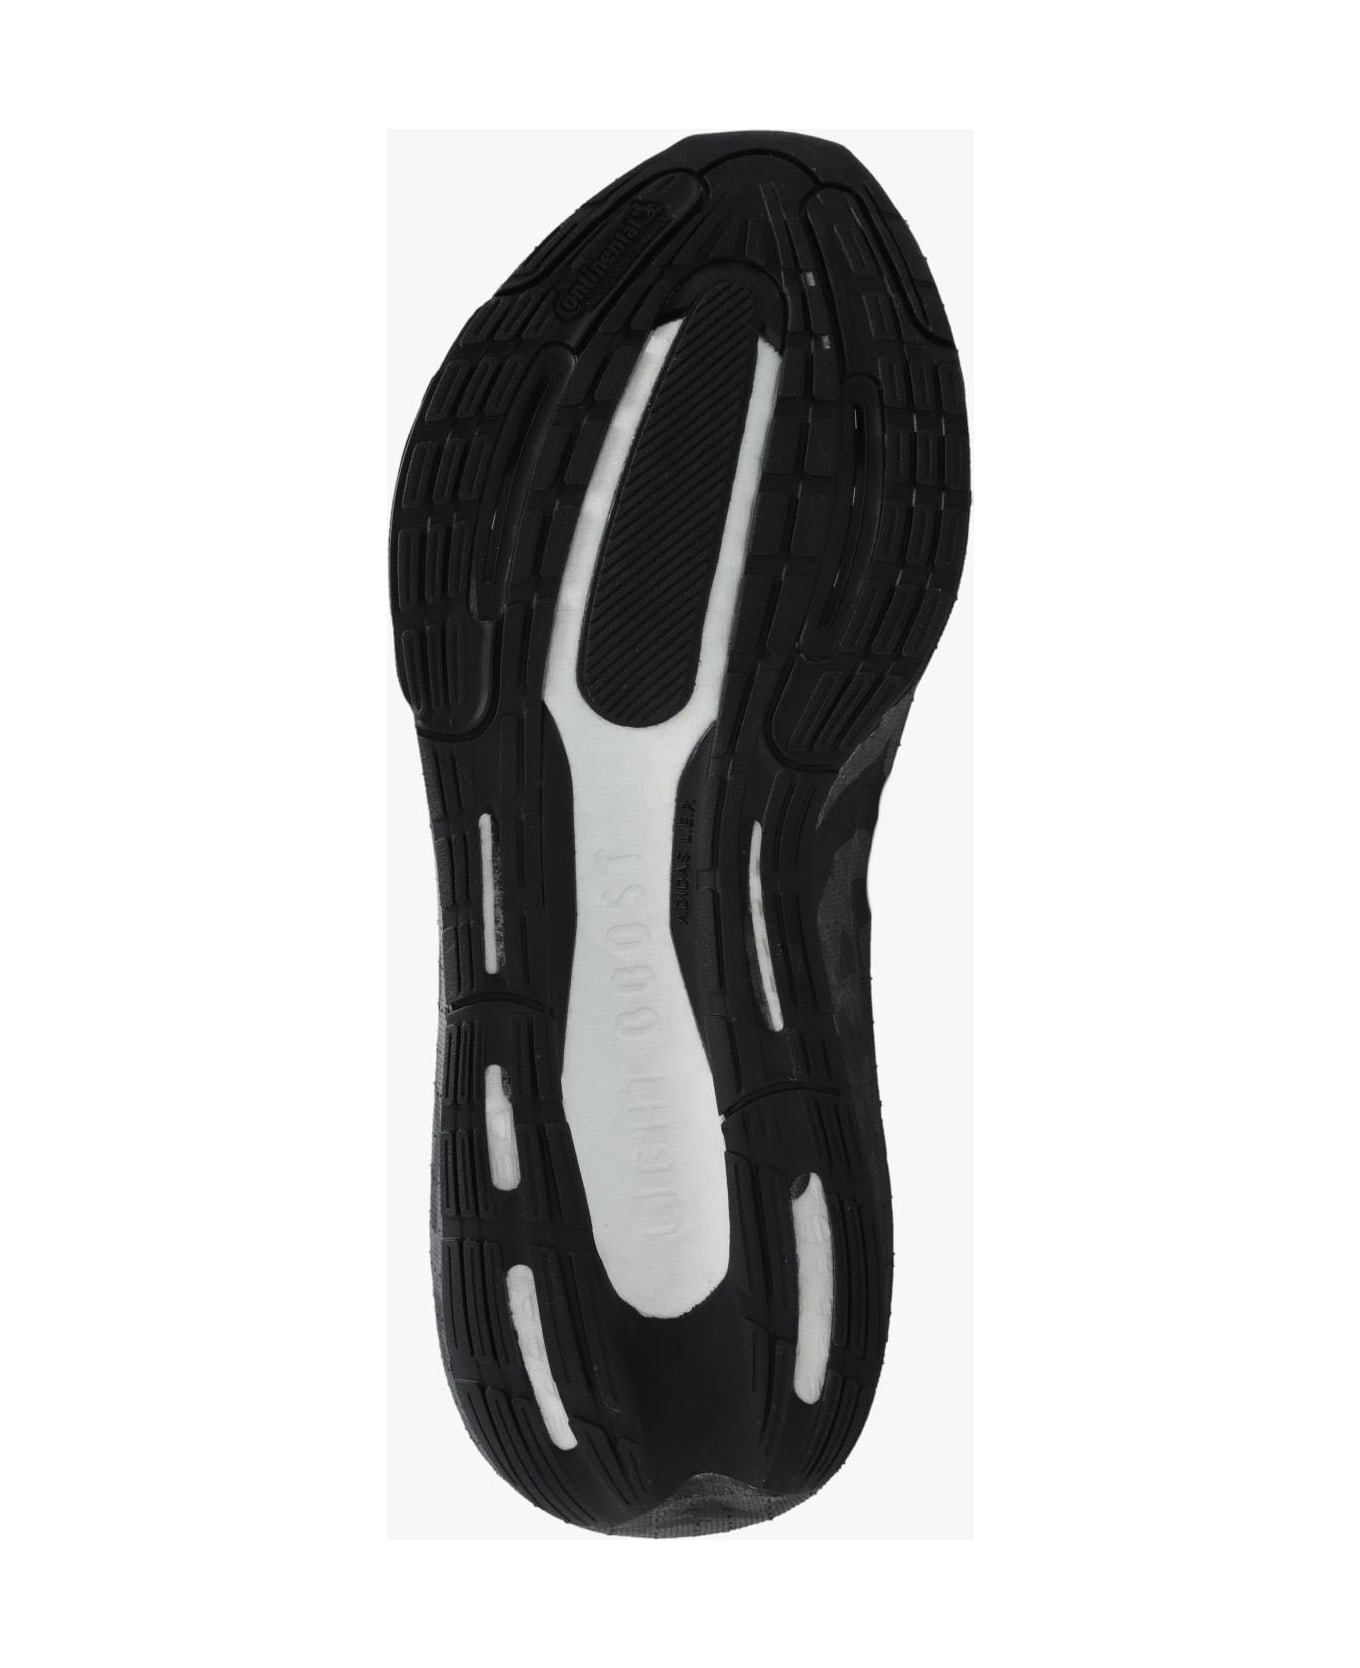 Adidas by Stella McCartney 'ultraboost 23' Sneakers - Core Black/core Black/ftwr White スニーカー